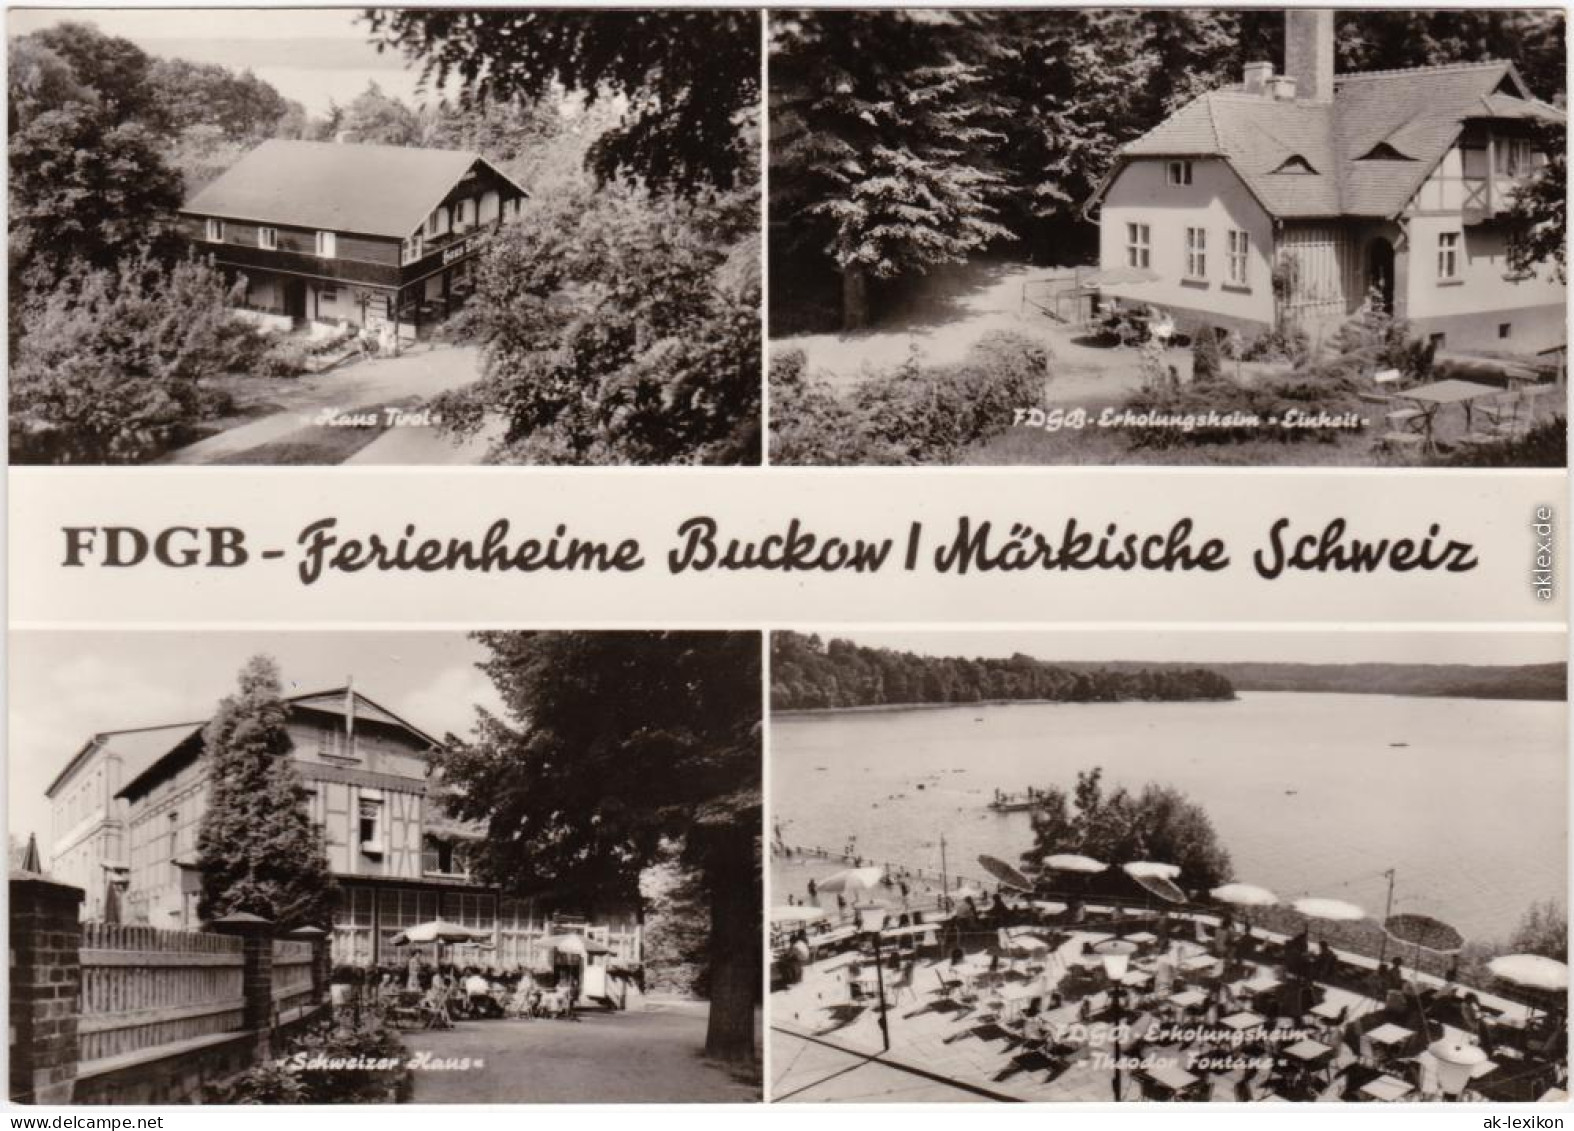 Buckow (Märkische Schweiz) FDGB Ferienheime - 4 Bild 1974  - Buckow